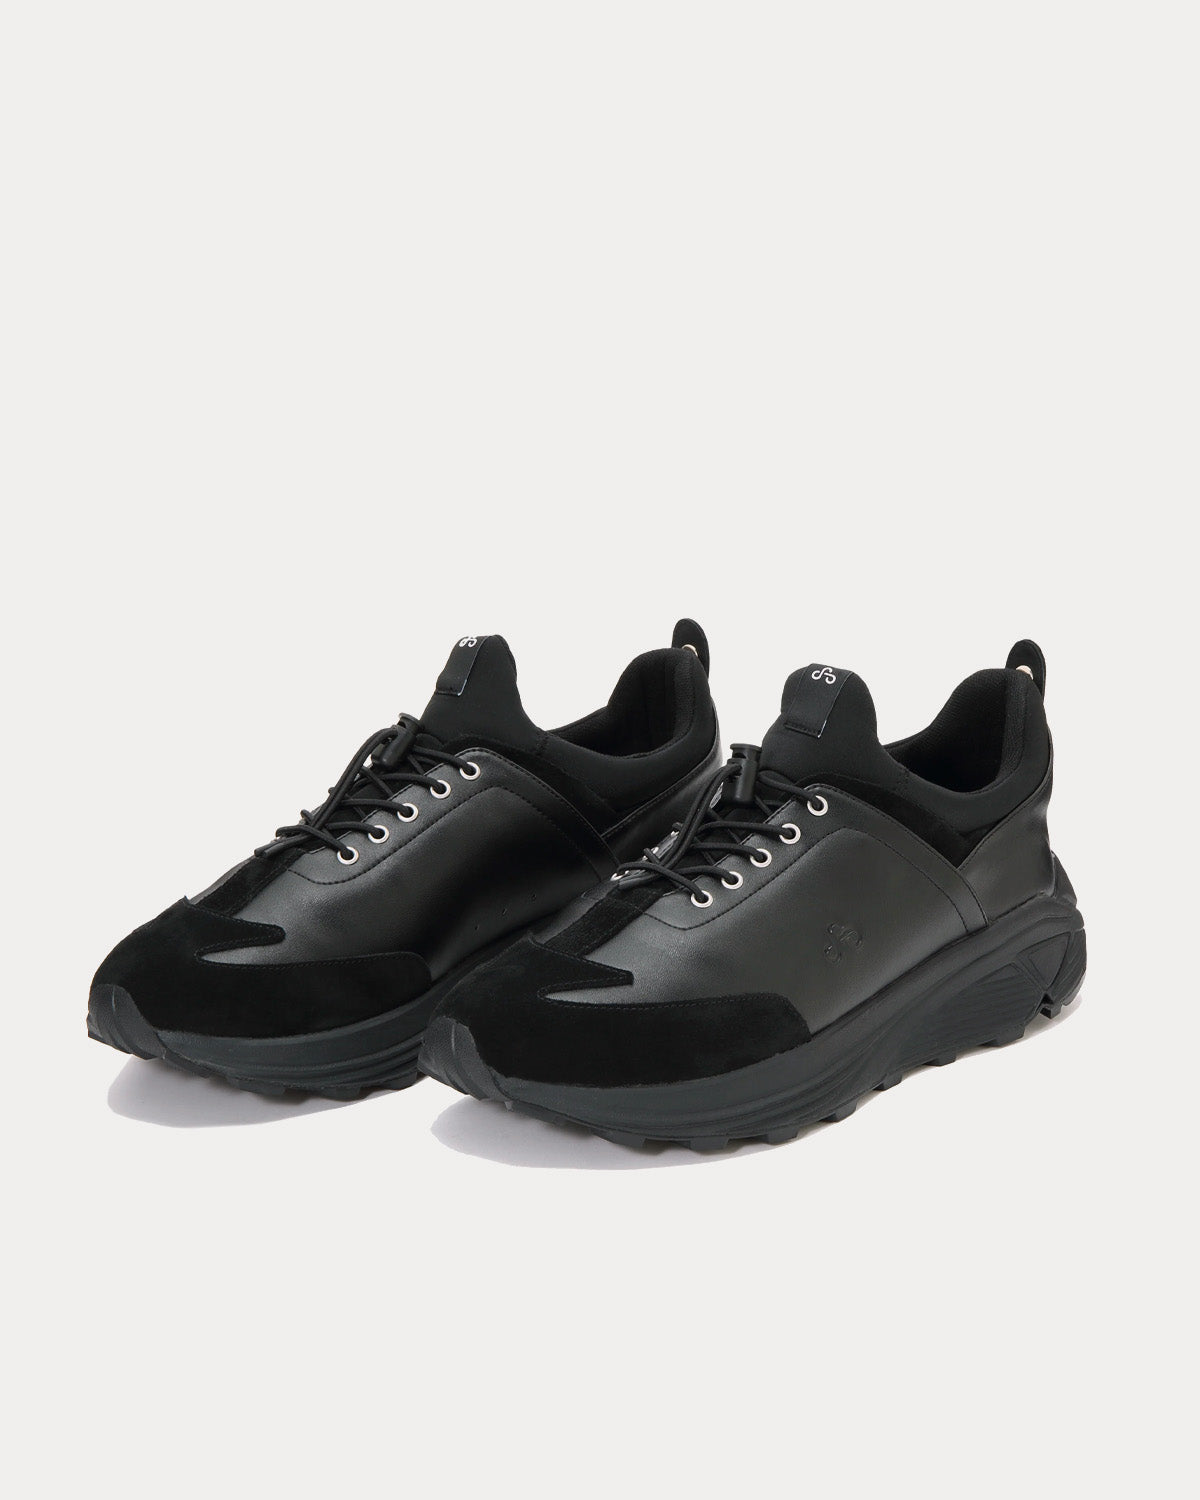 OAO - Mona Black Low Top Sneakers